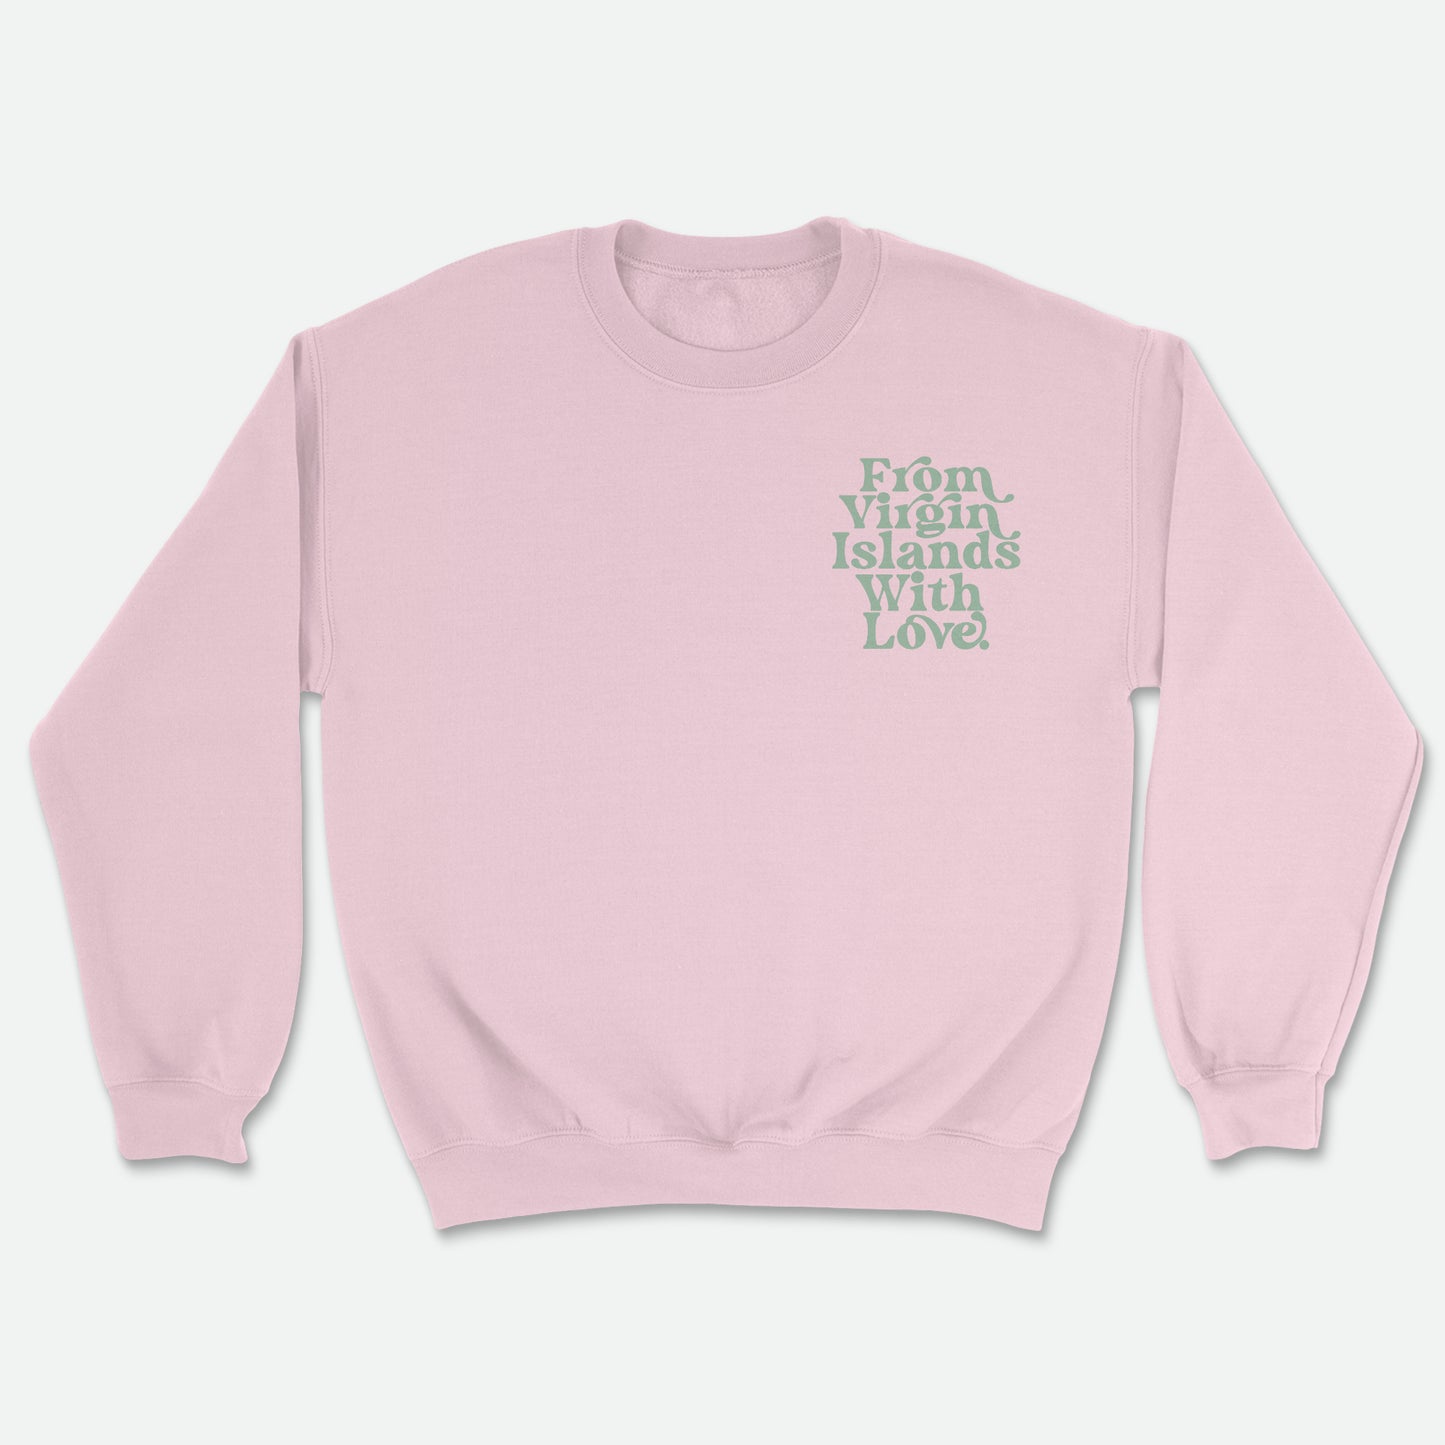 From Virgin Islands With Love Sweatshirt (Mint Print)